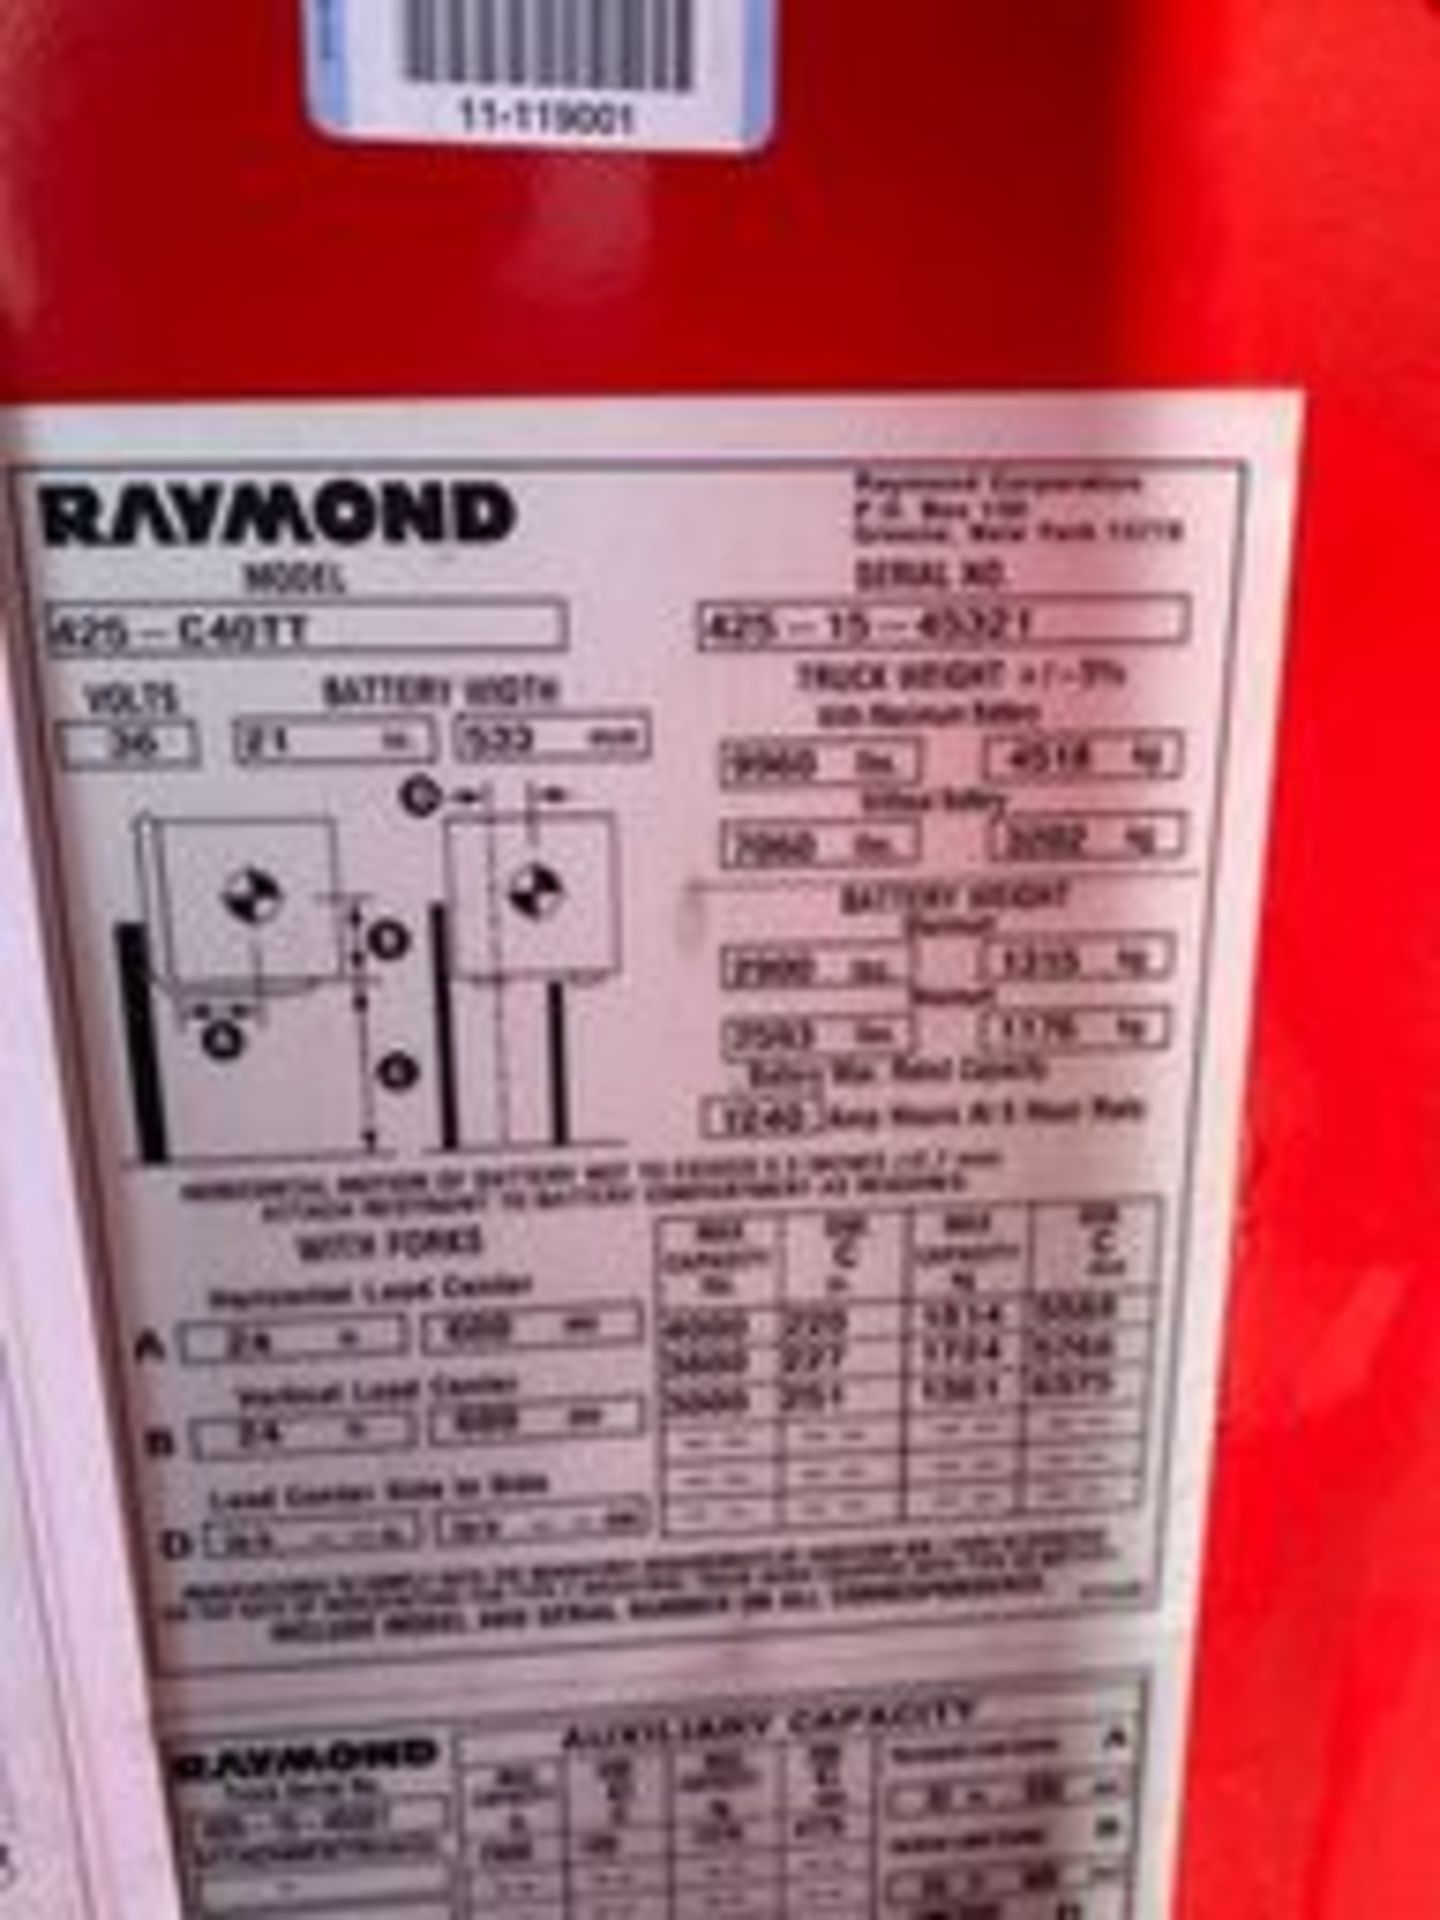 Raymond Forklift, Model #425-C40TT, S/N #425-15-45321, Truck Weight W/ Max Battery = 9960 Lb - Image 9 of 10